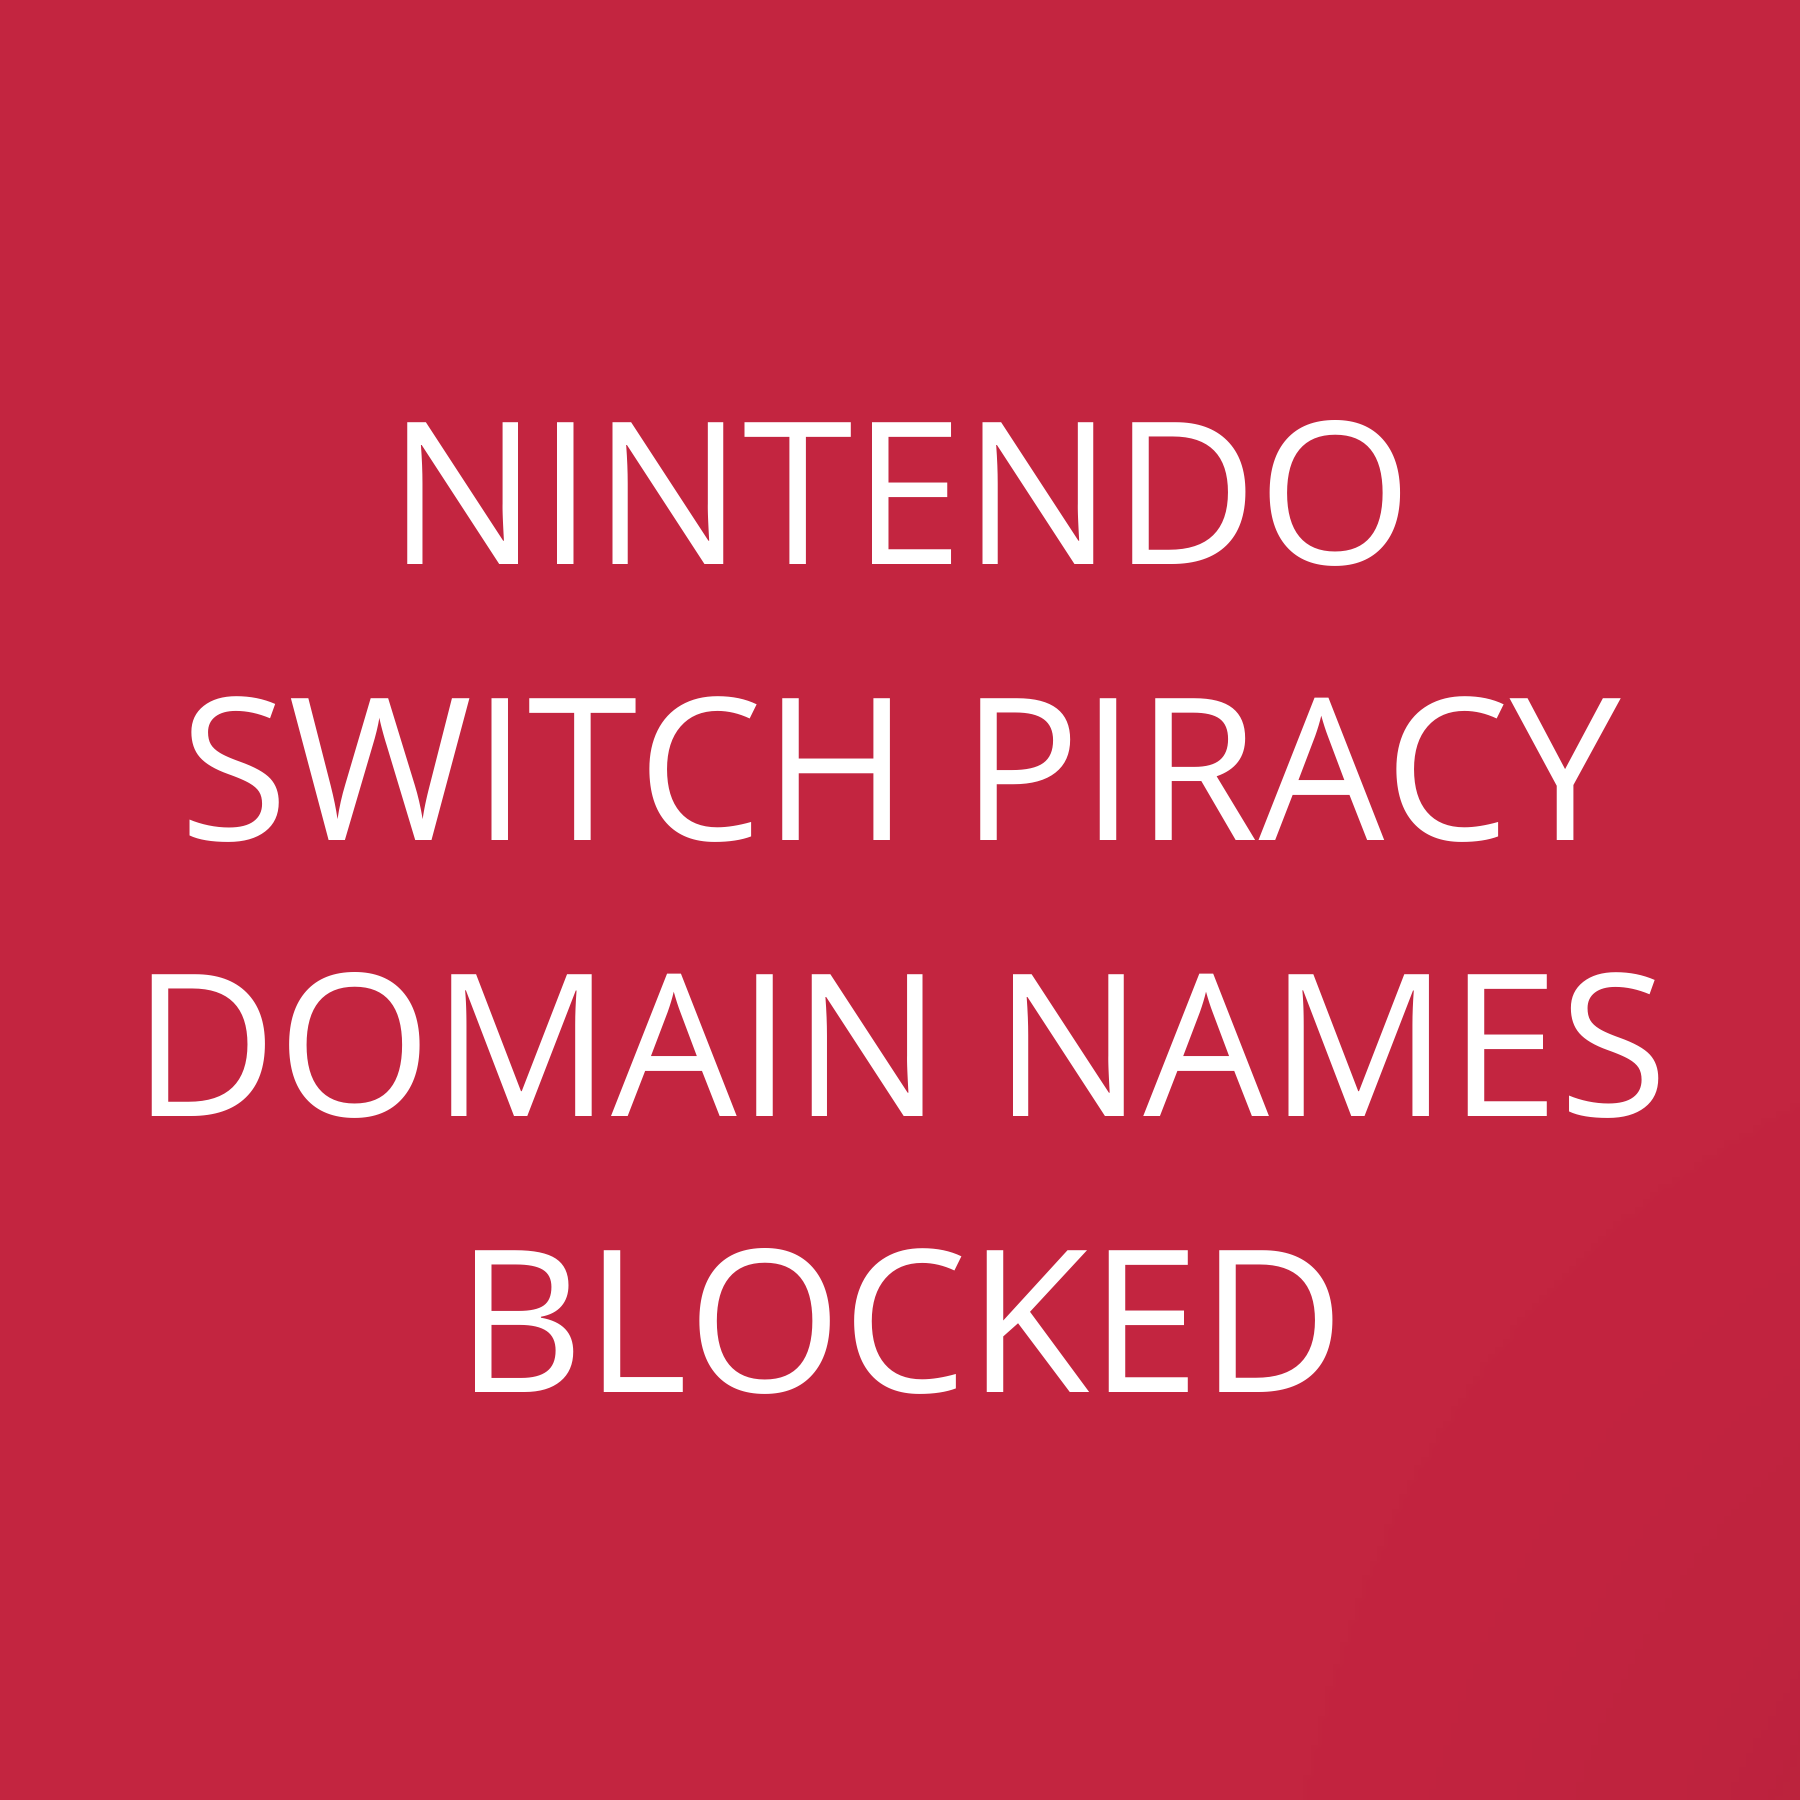 Nintendo Switch piracy domain names blocked